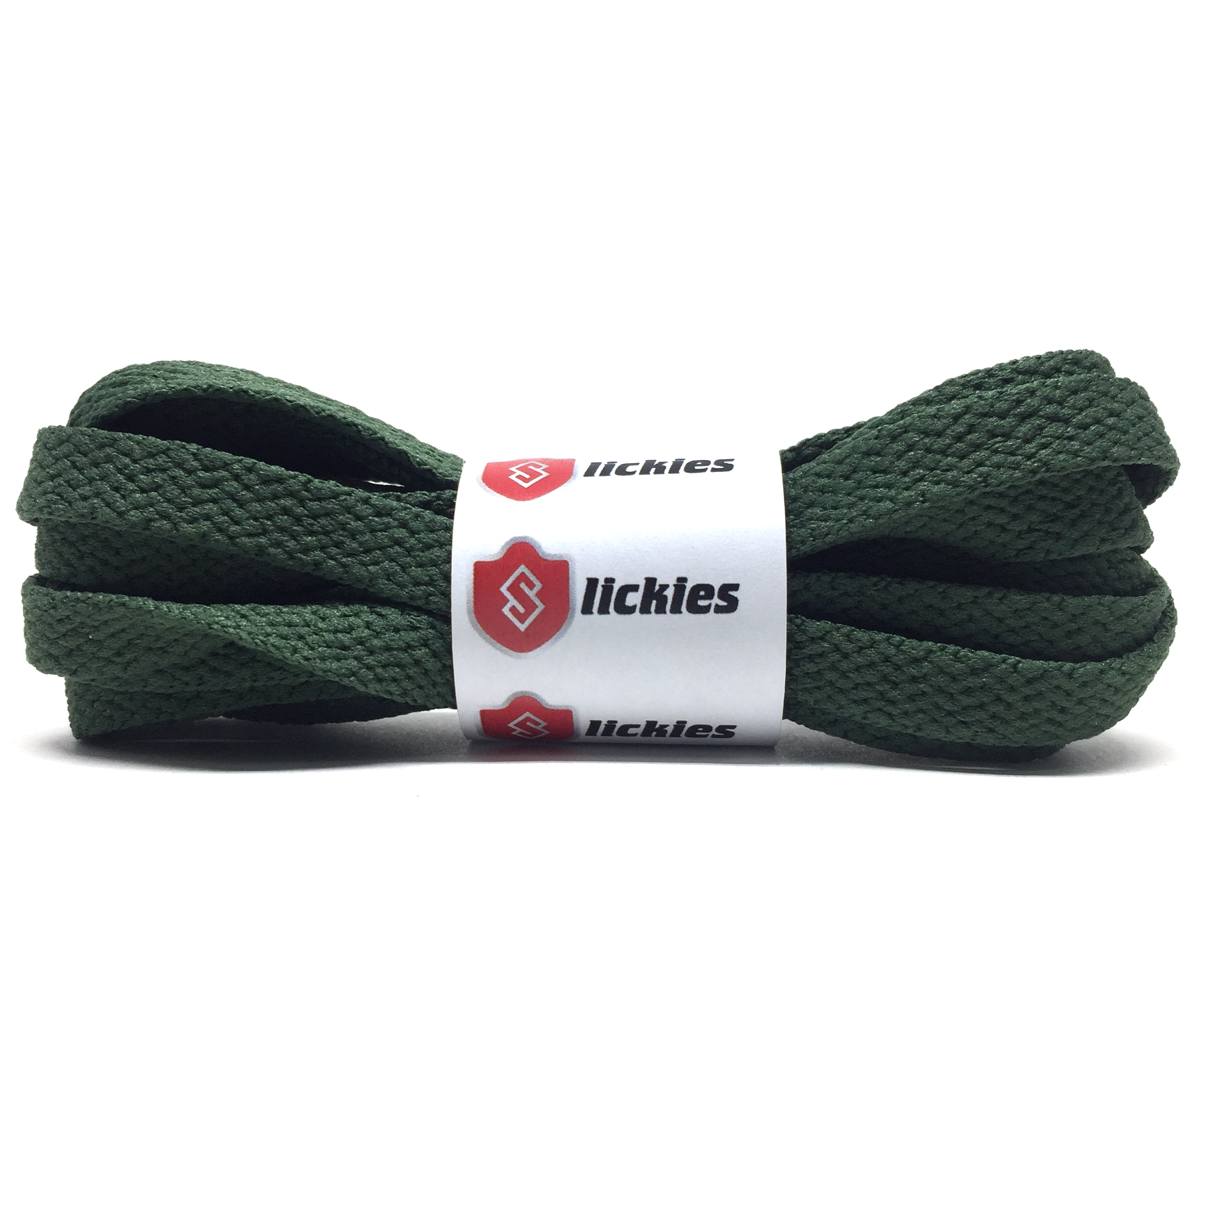 olive green flat shoelaces